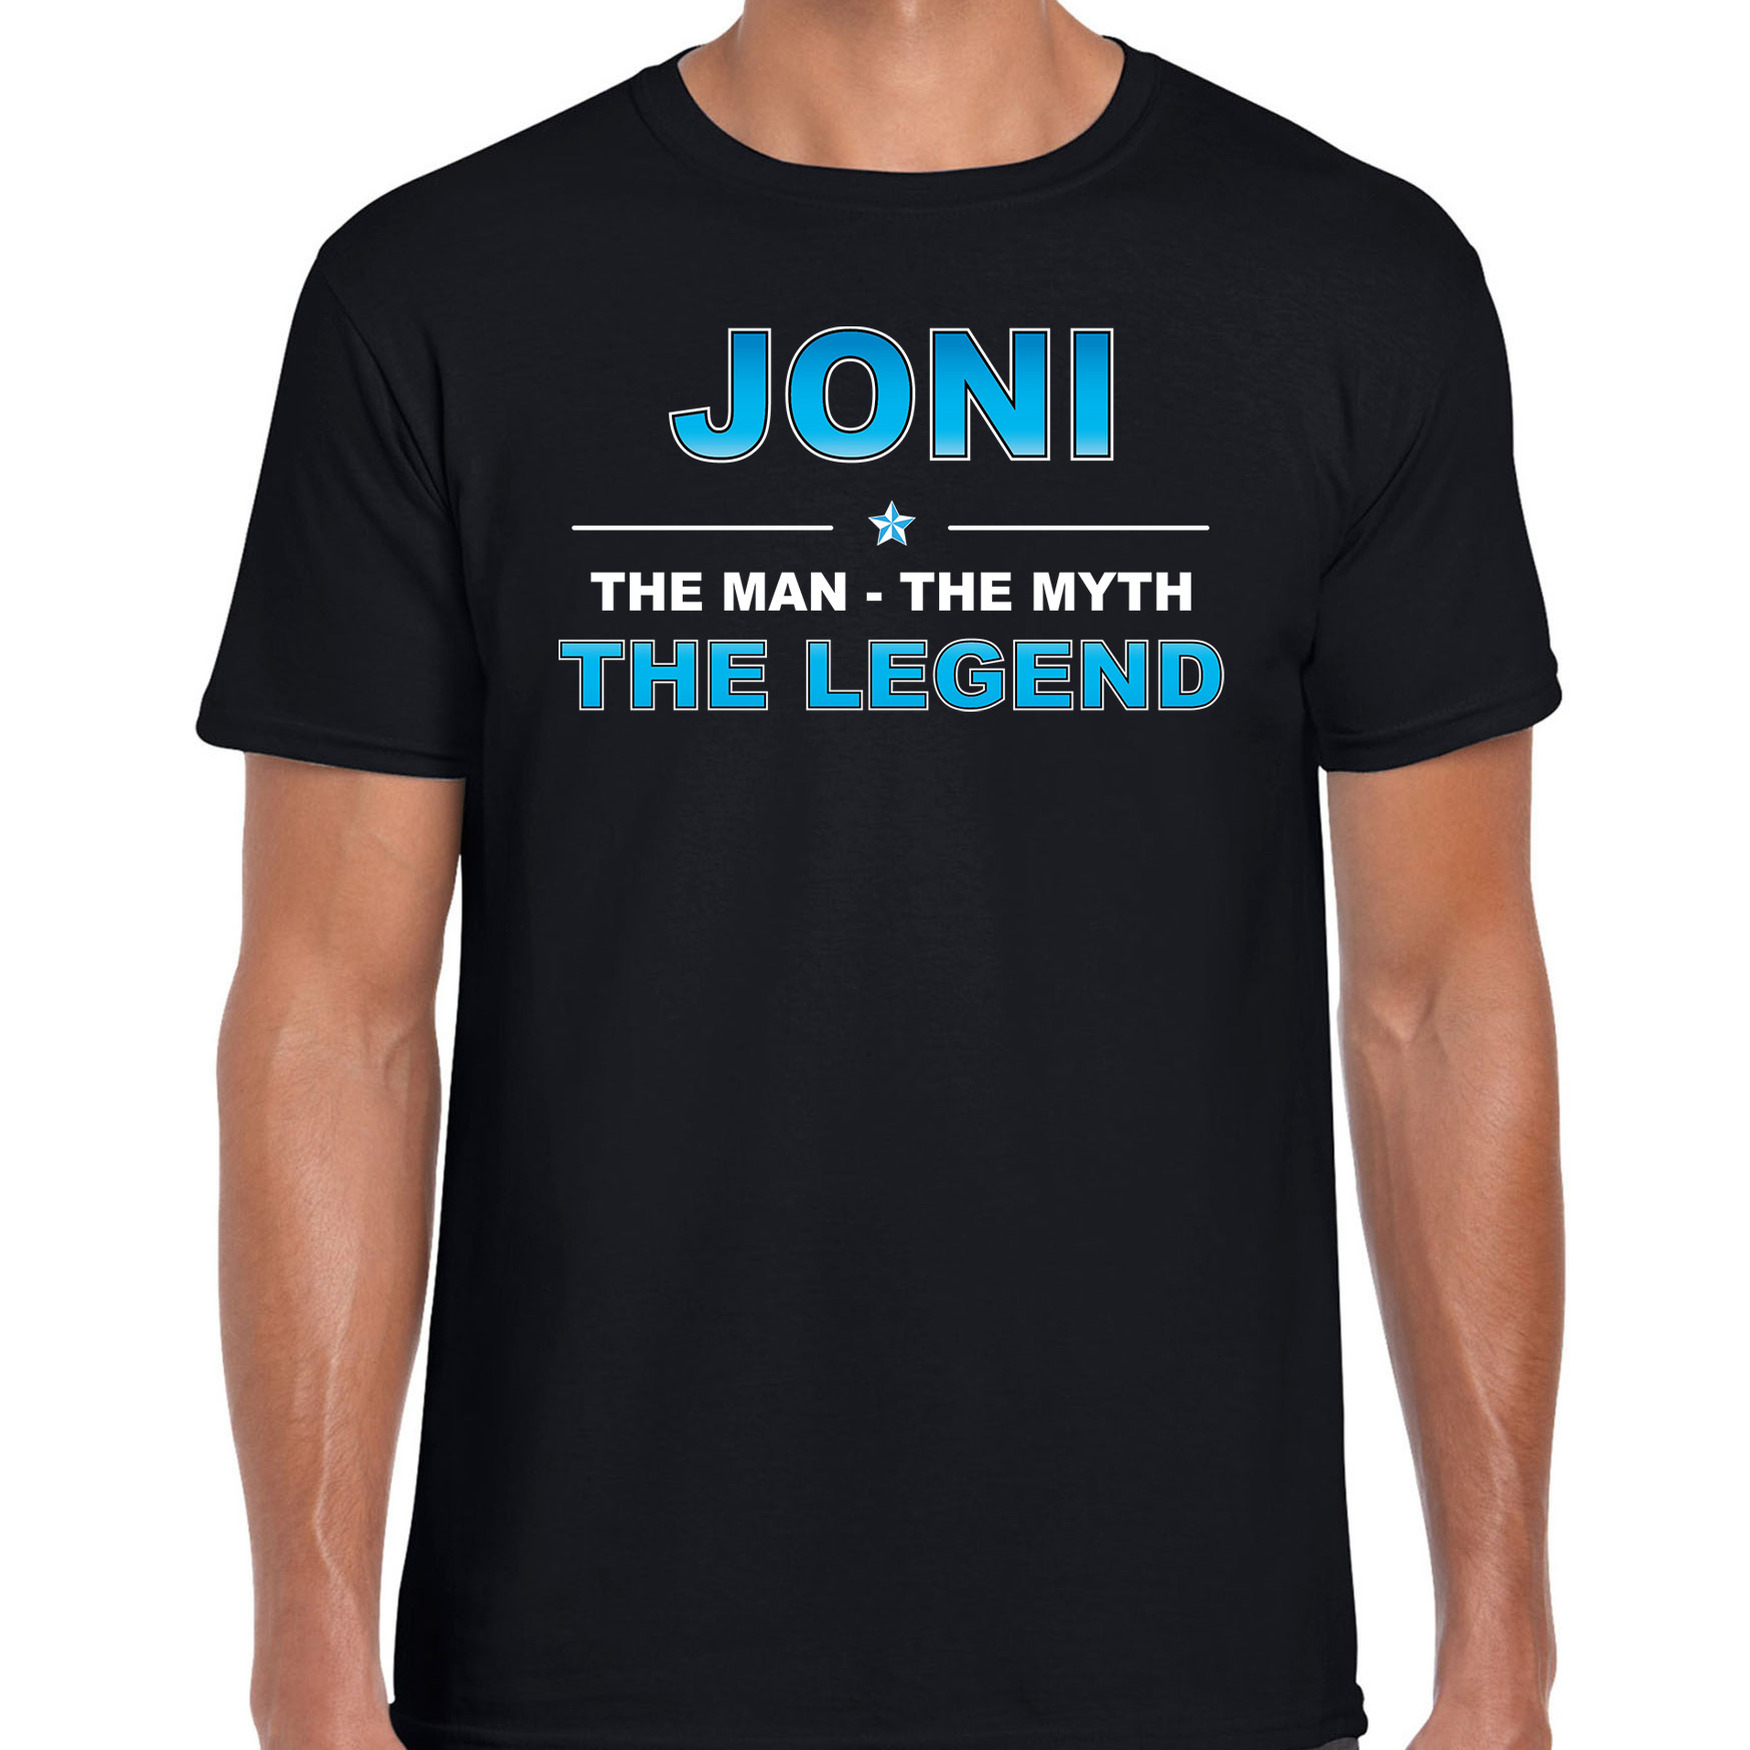 Naam cadeau t-shirt Joni the legend zwart voor heren